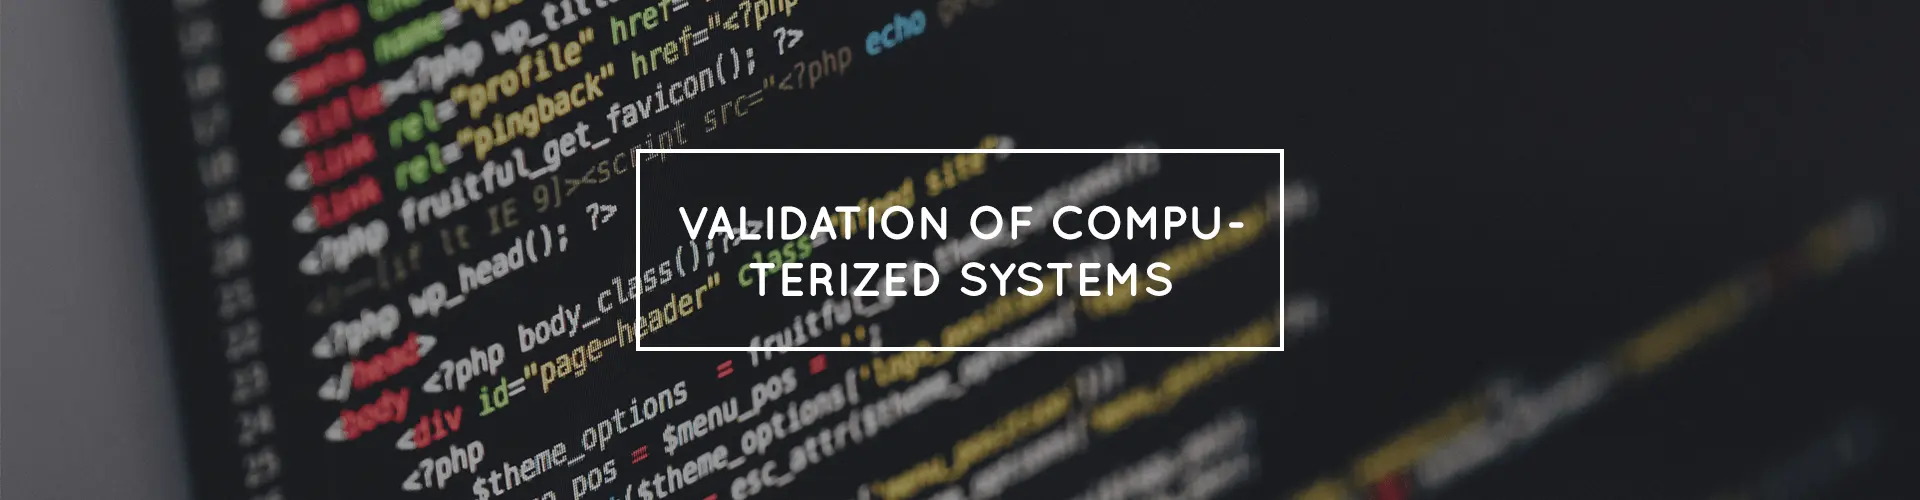 validation of computadorized systems